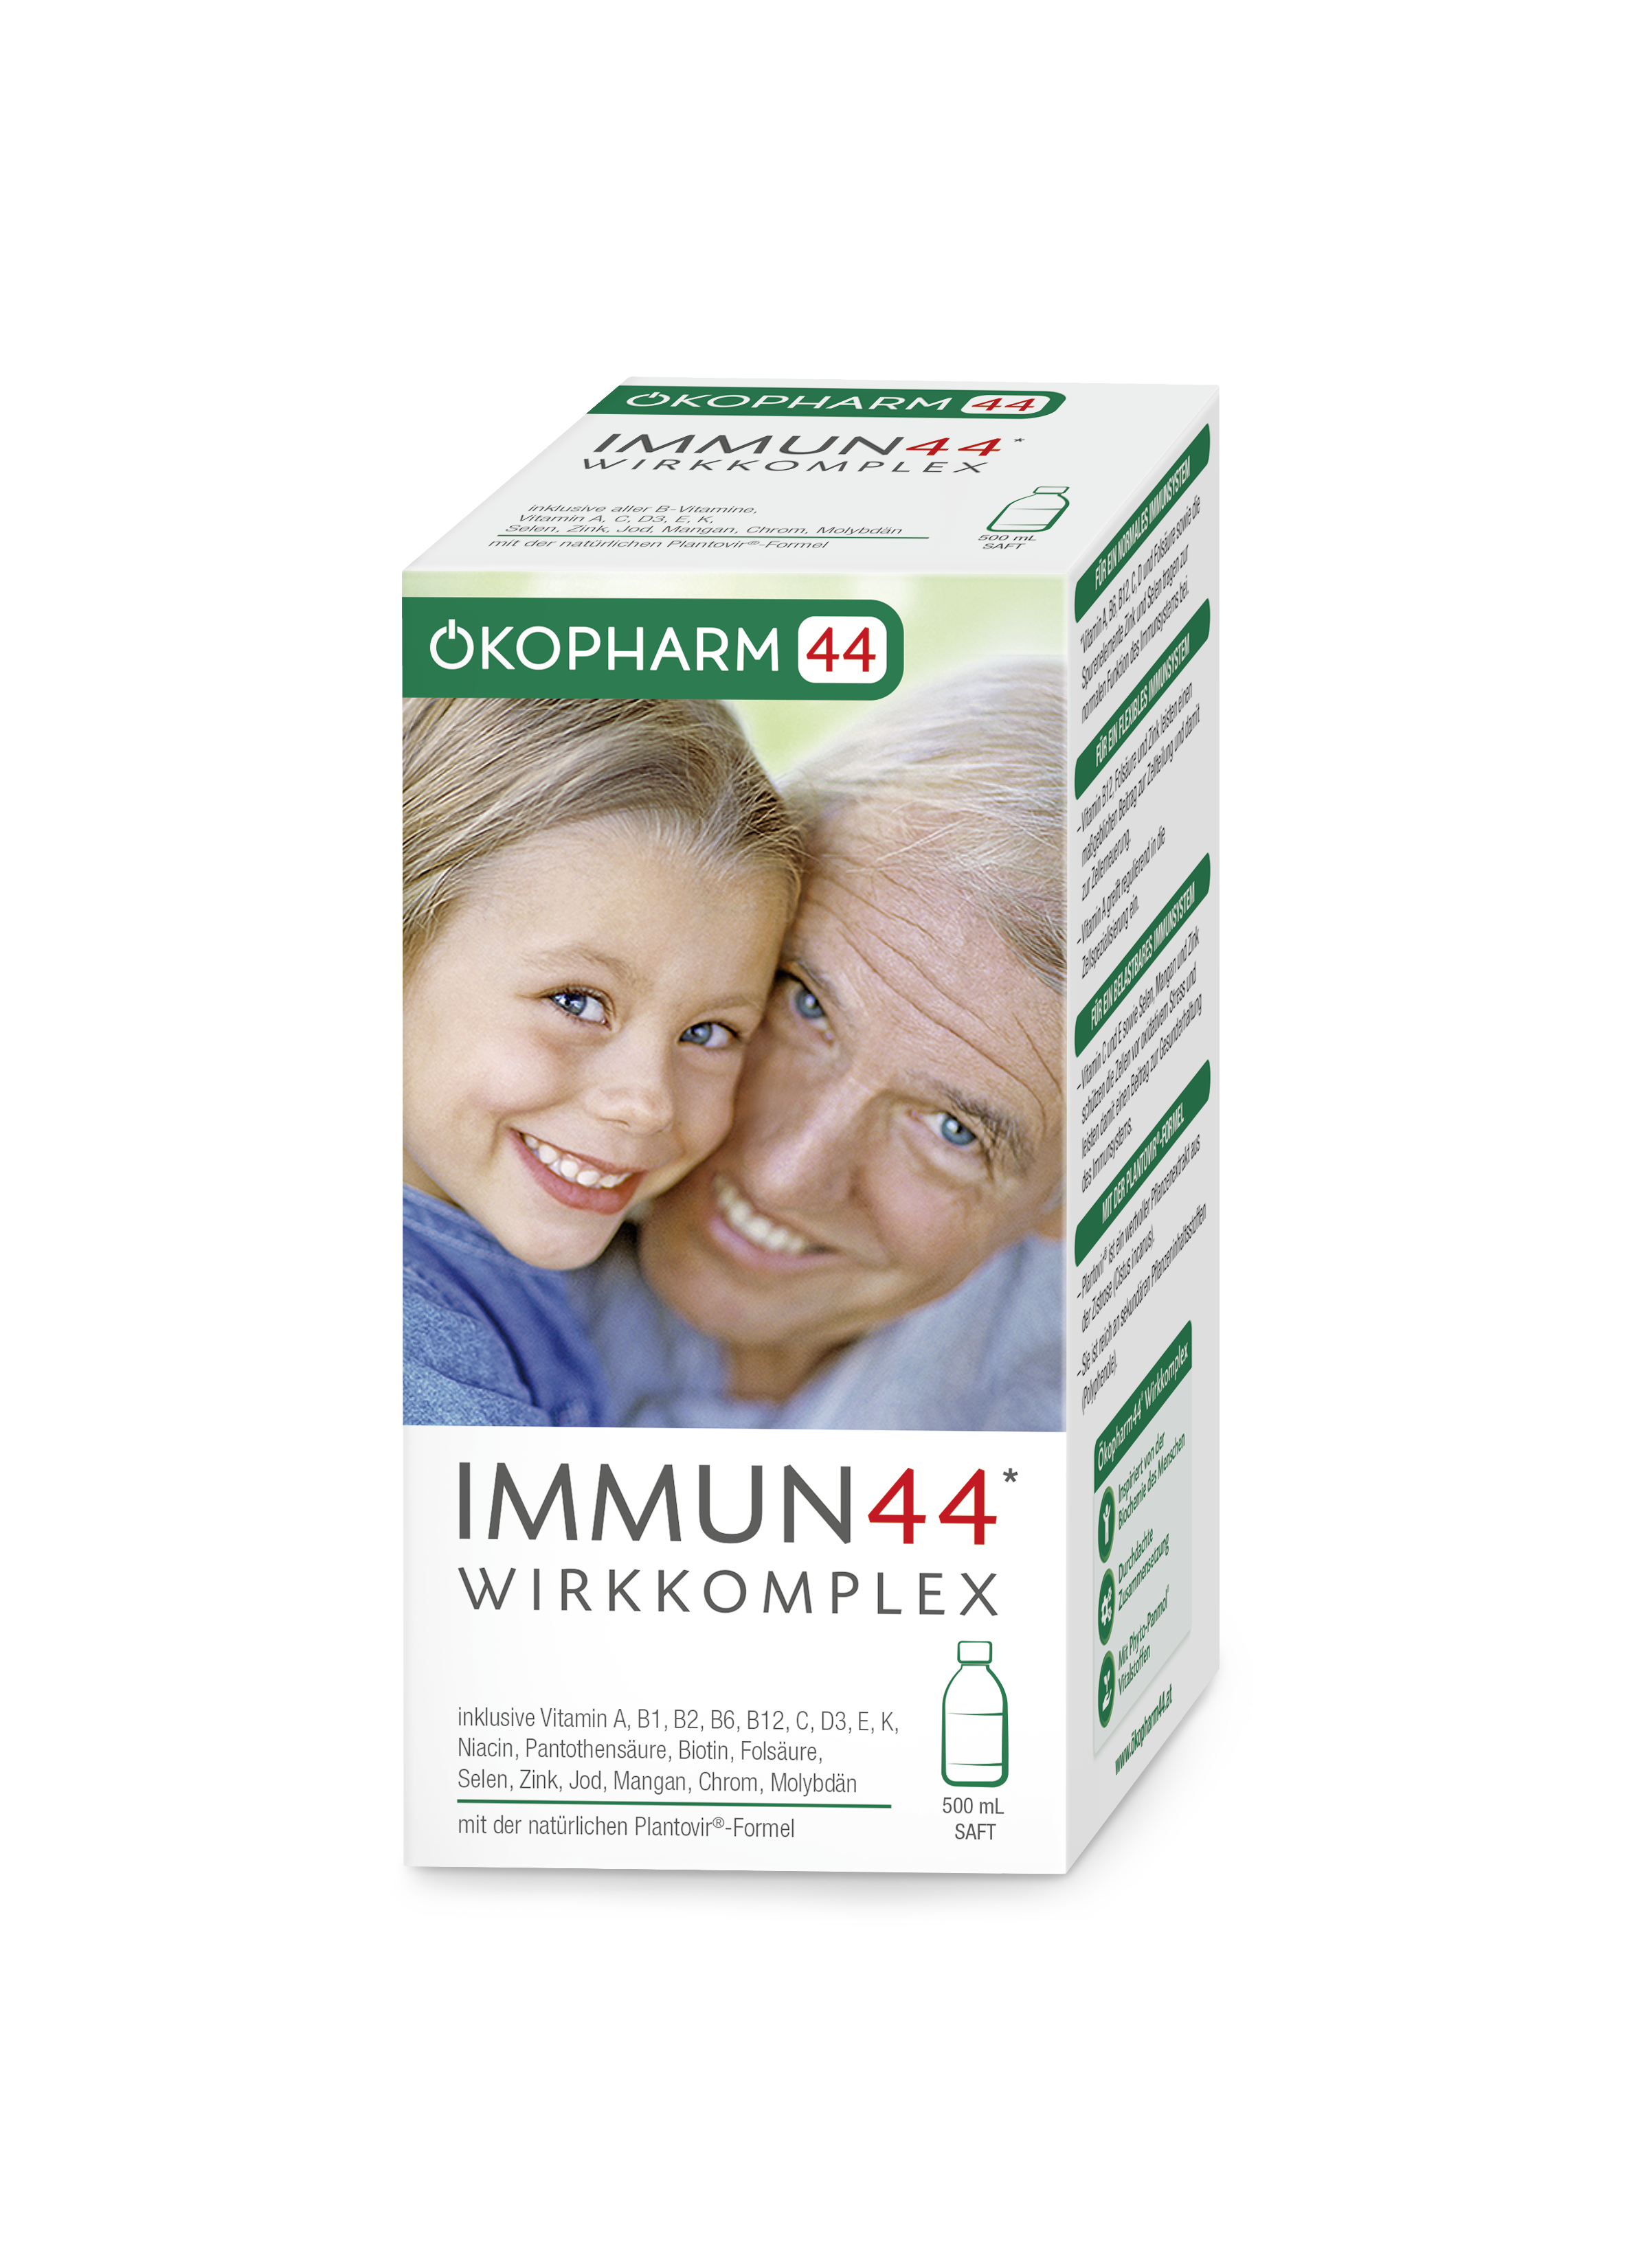 Ökopharm44® Immun44® Wirkkomplex Saft 500mL